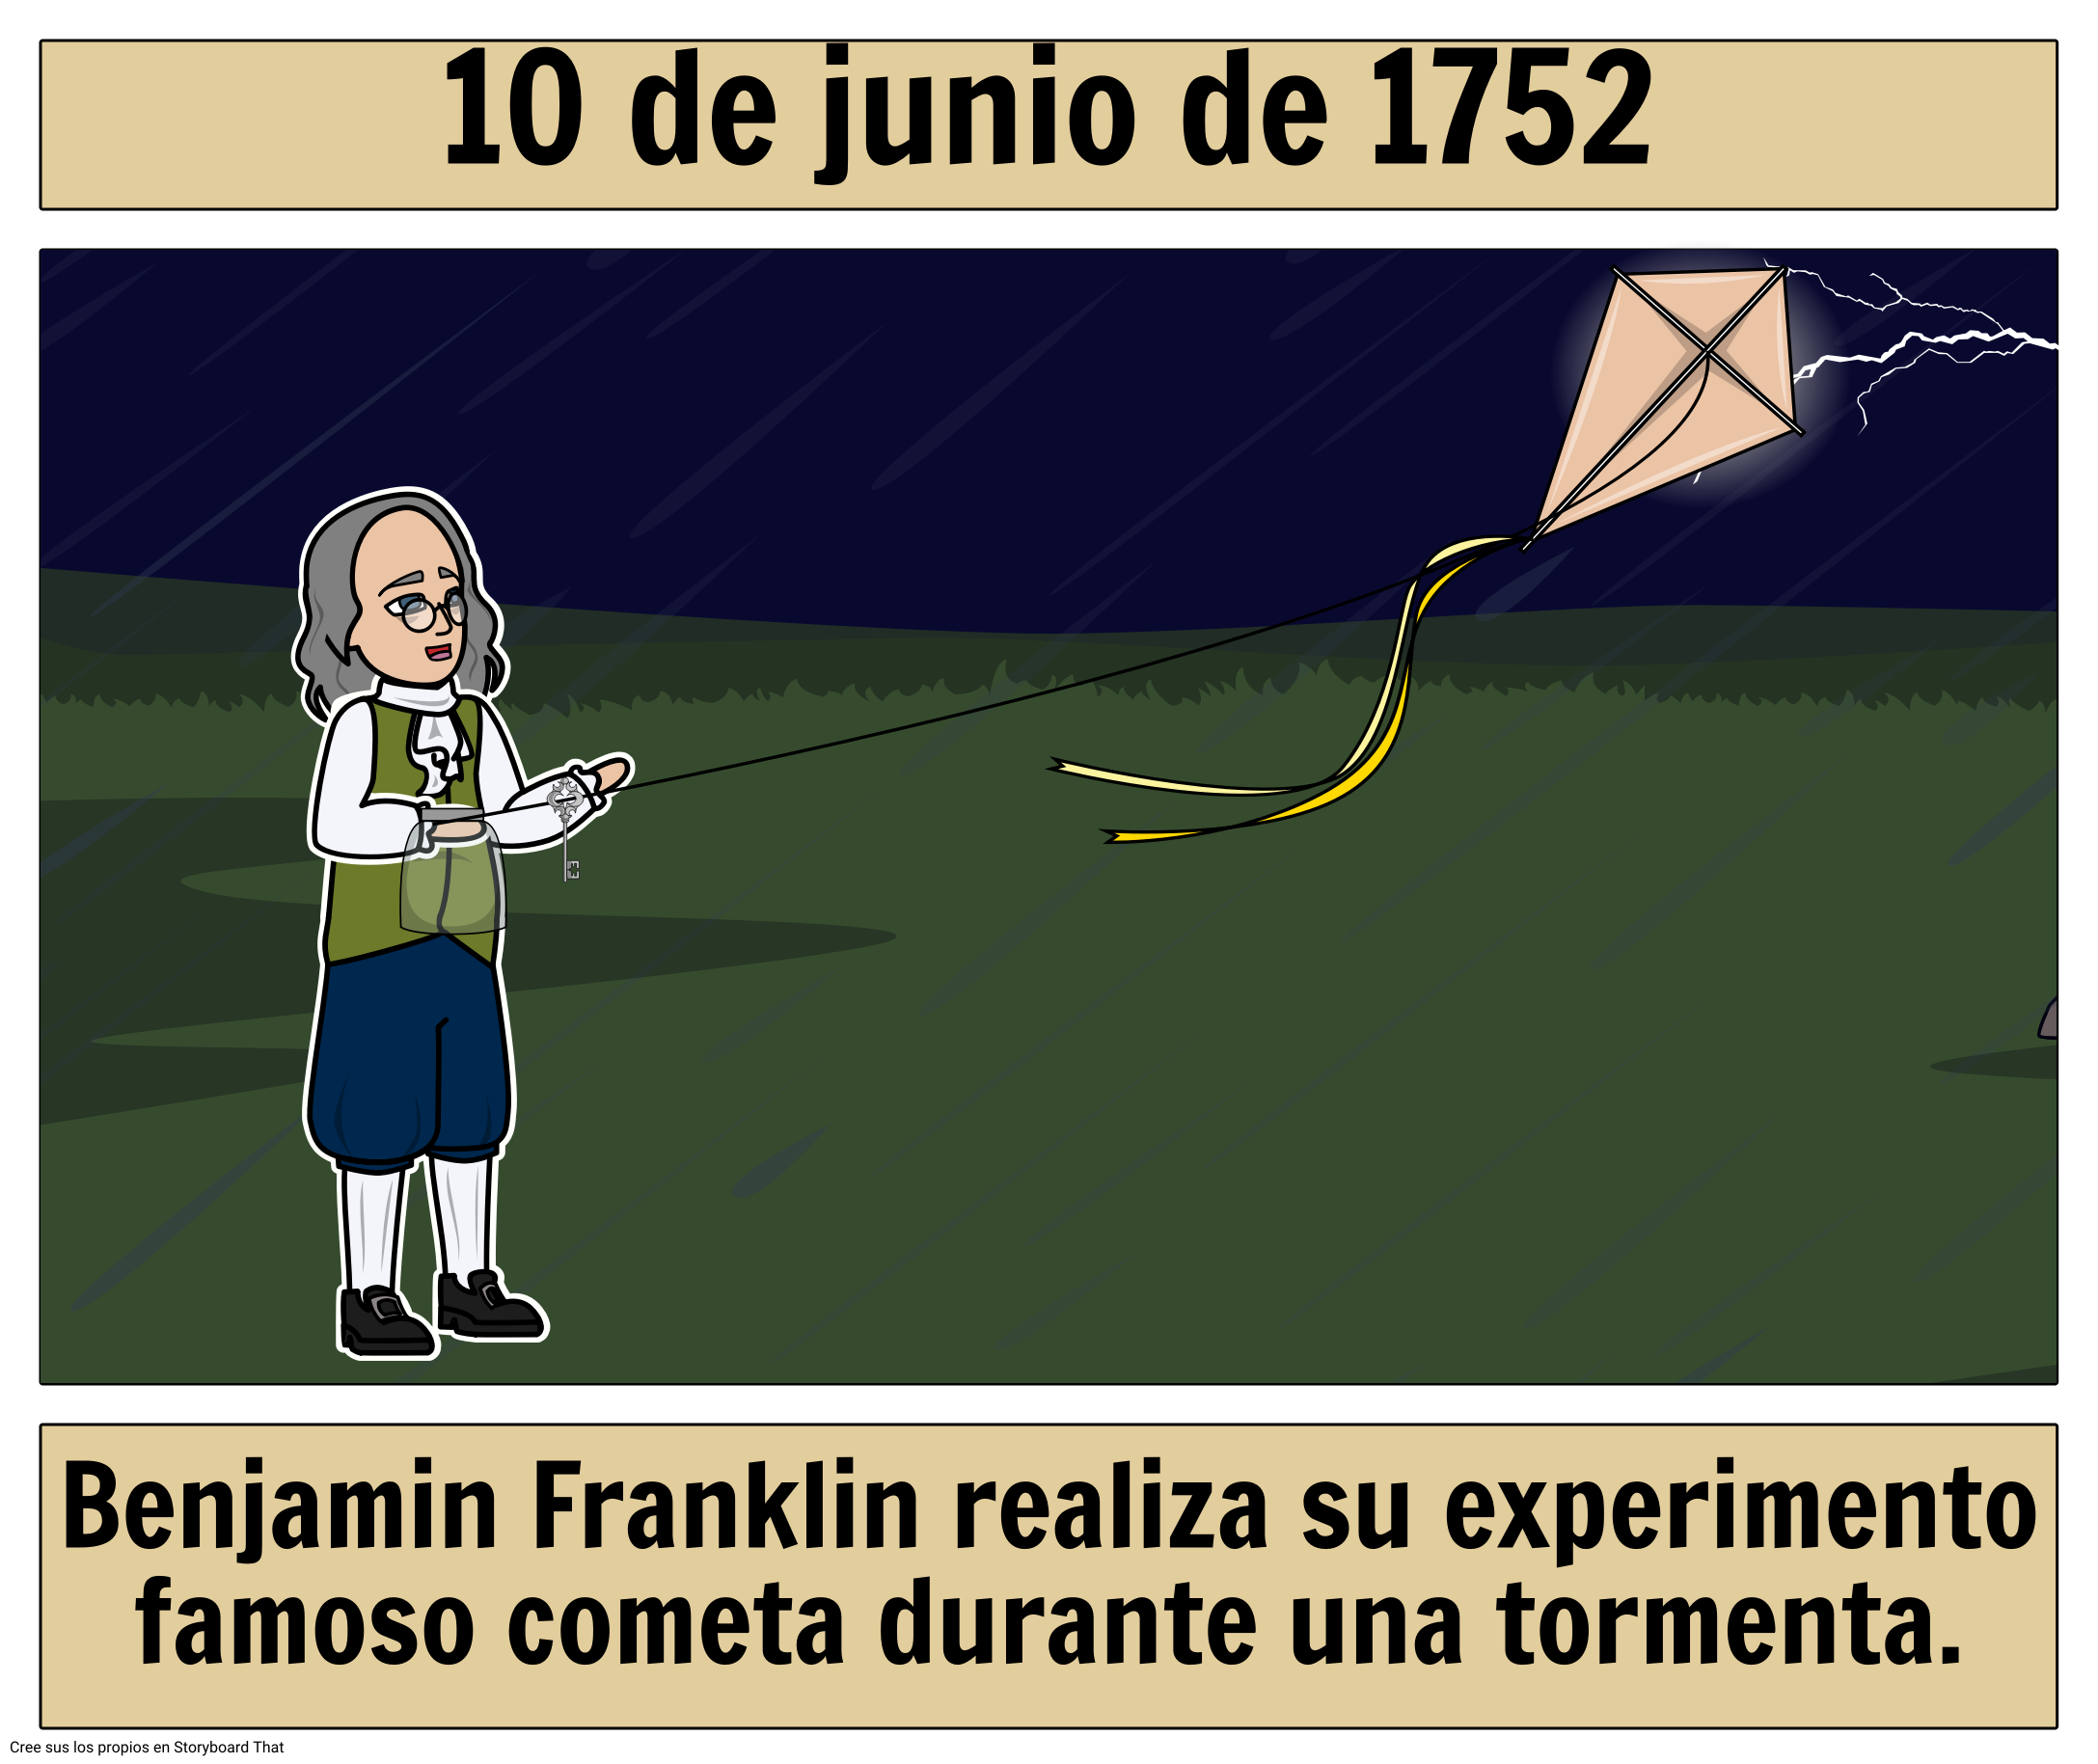 Benjamin Franklin Vuela el Cometa 